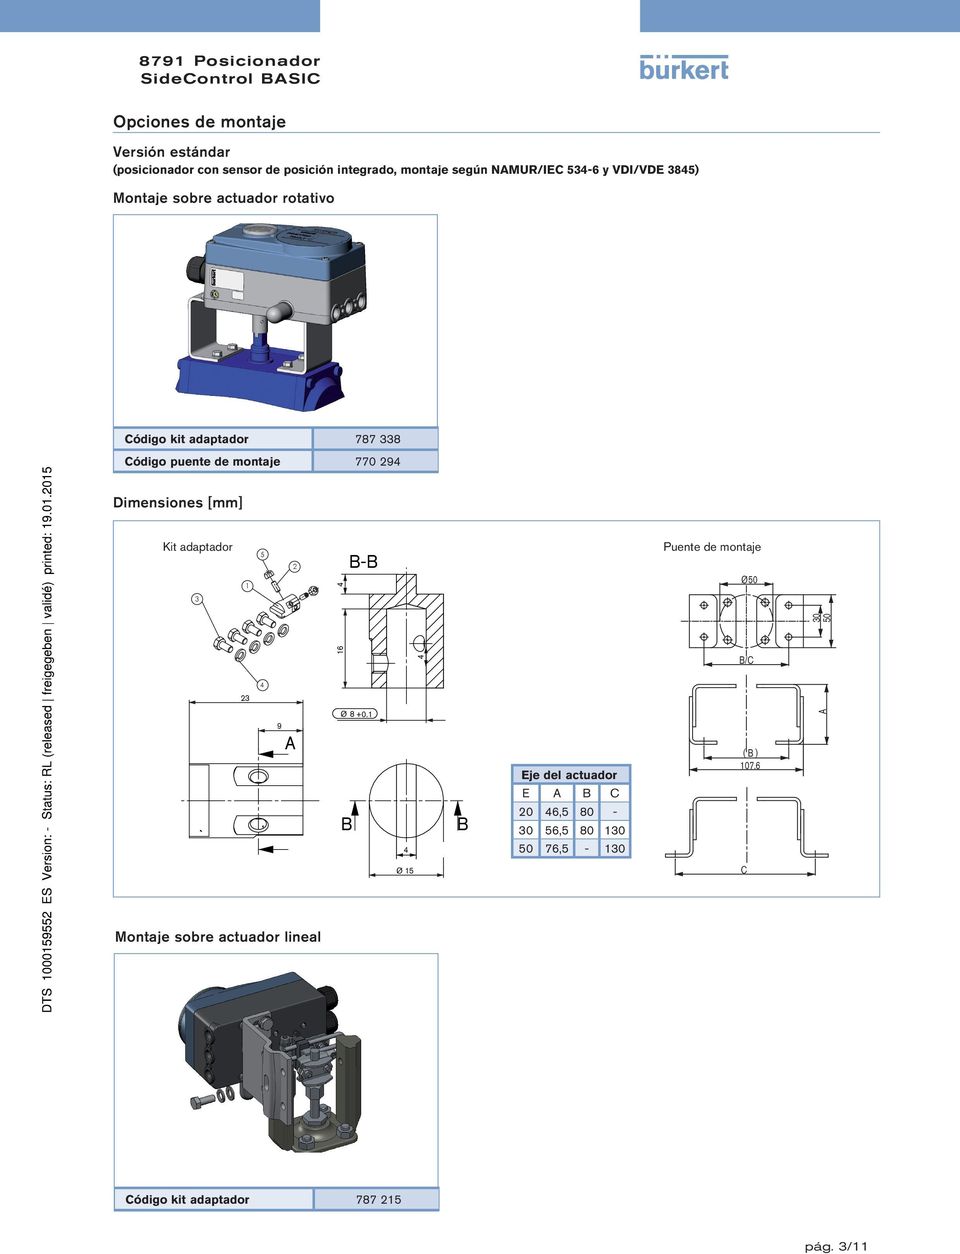 Dimensiones [mm] Kit adaptador 1 5 2 4 B-B Puente de montaje 50 3 16 4 30 50 B/C 4 23 9 A 8 0.